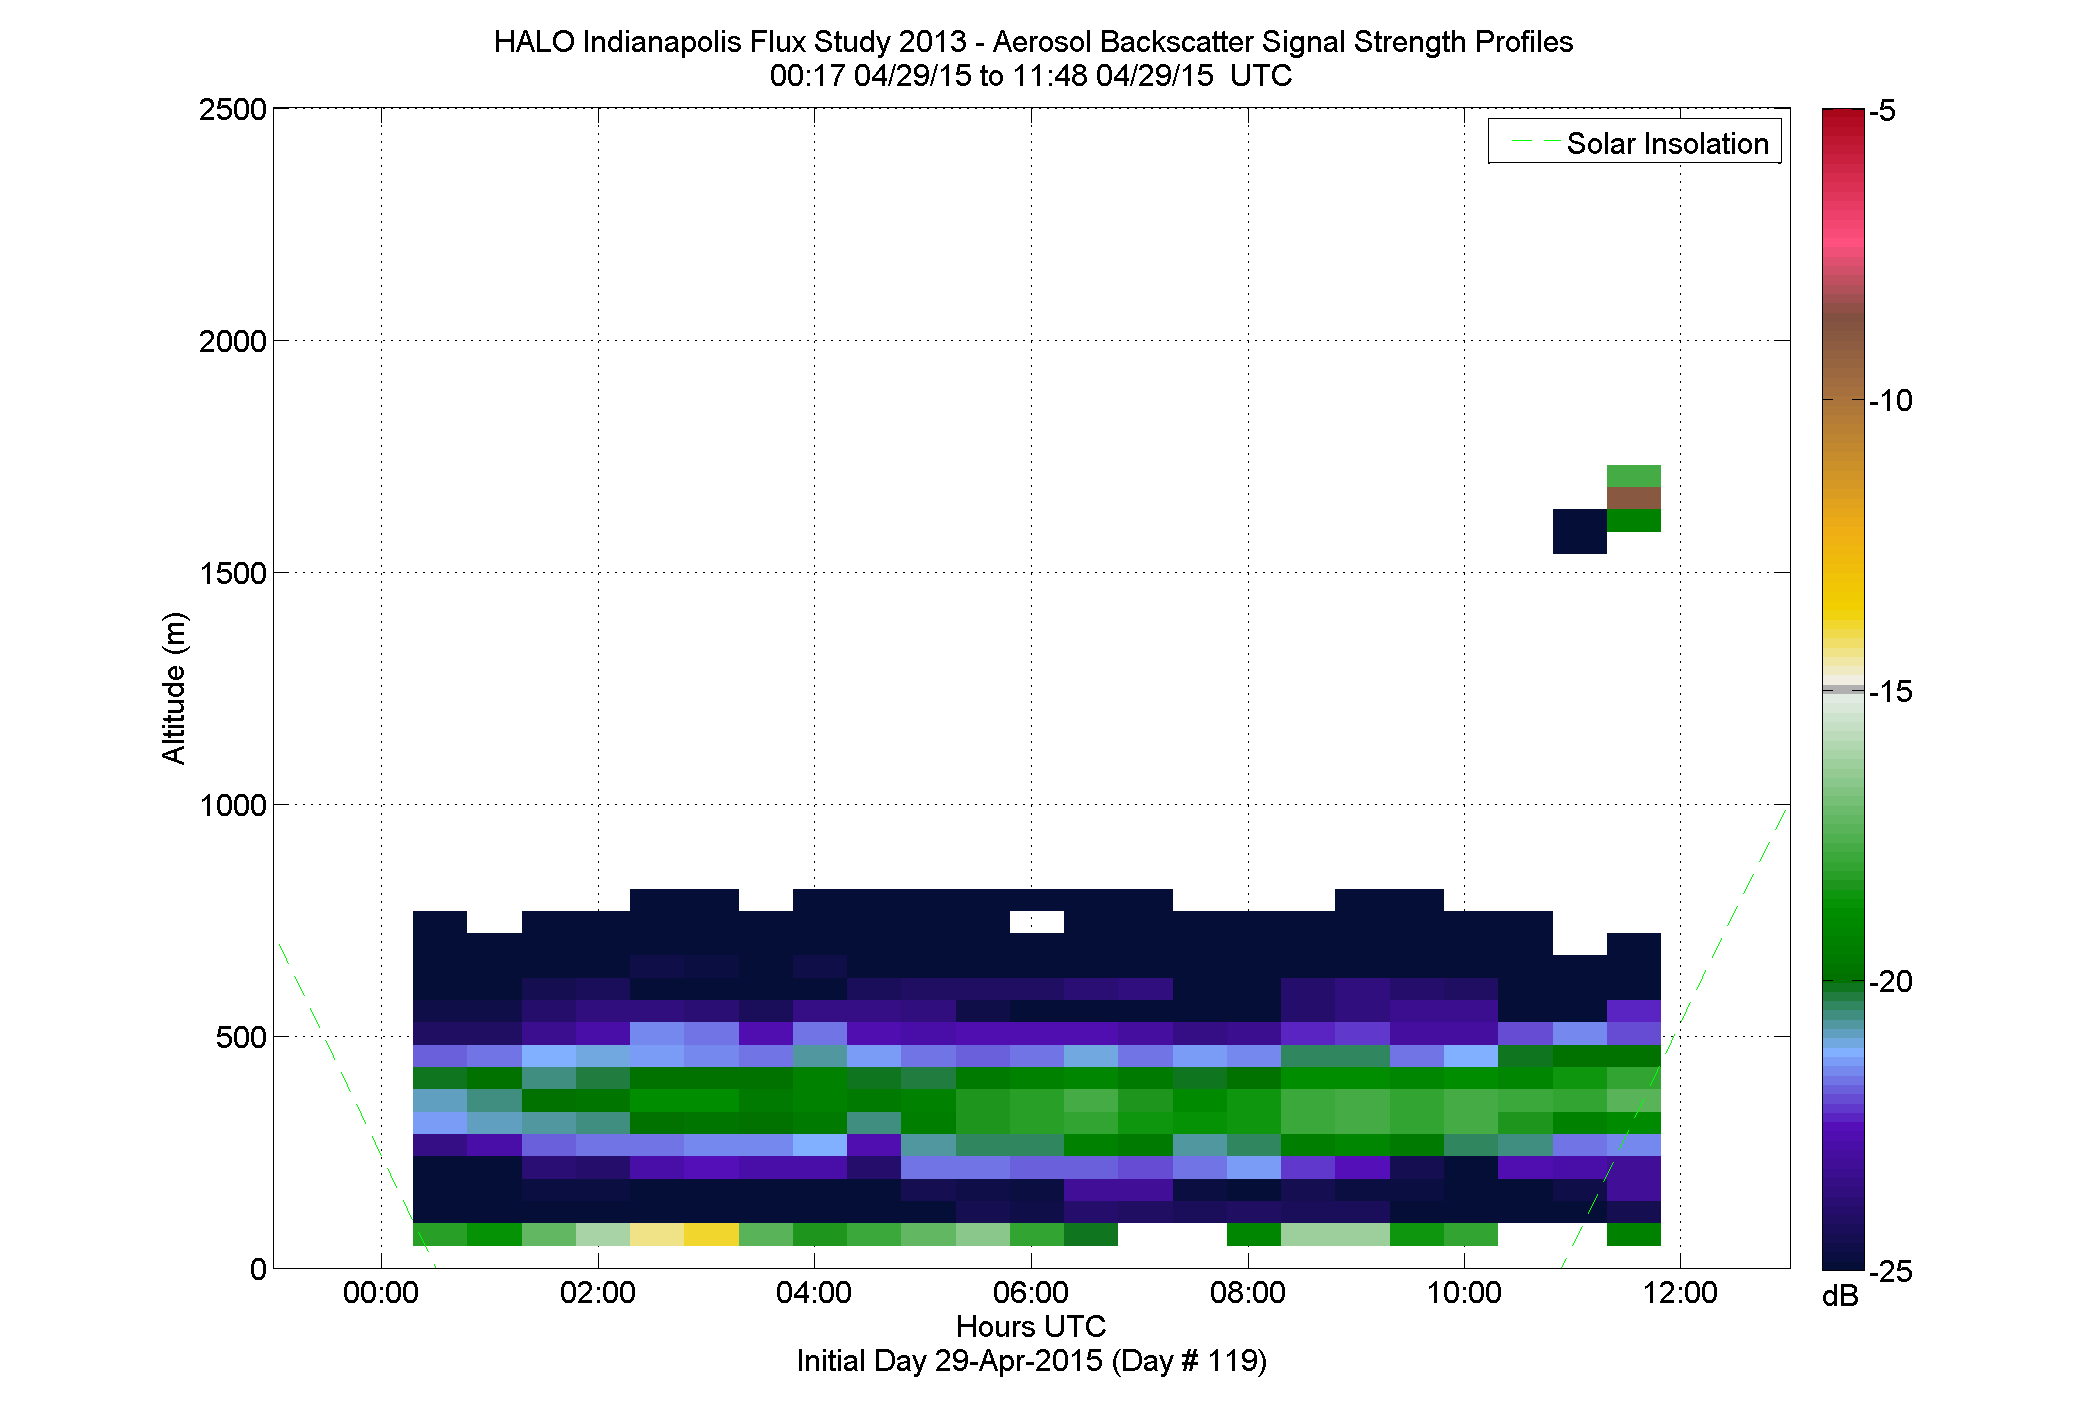 HALO aerosol backscatter signal strength profile - April 29 am